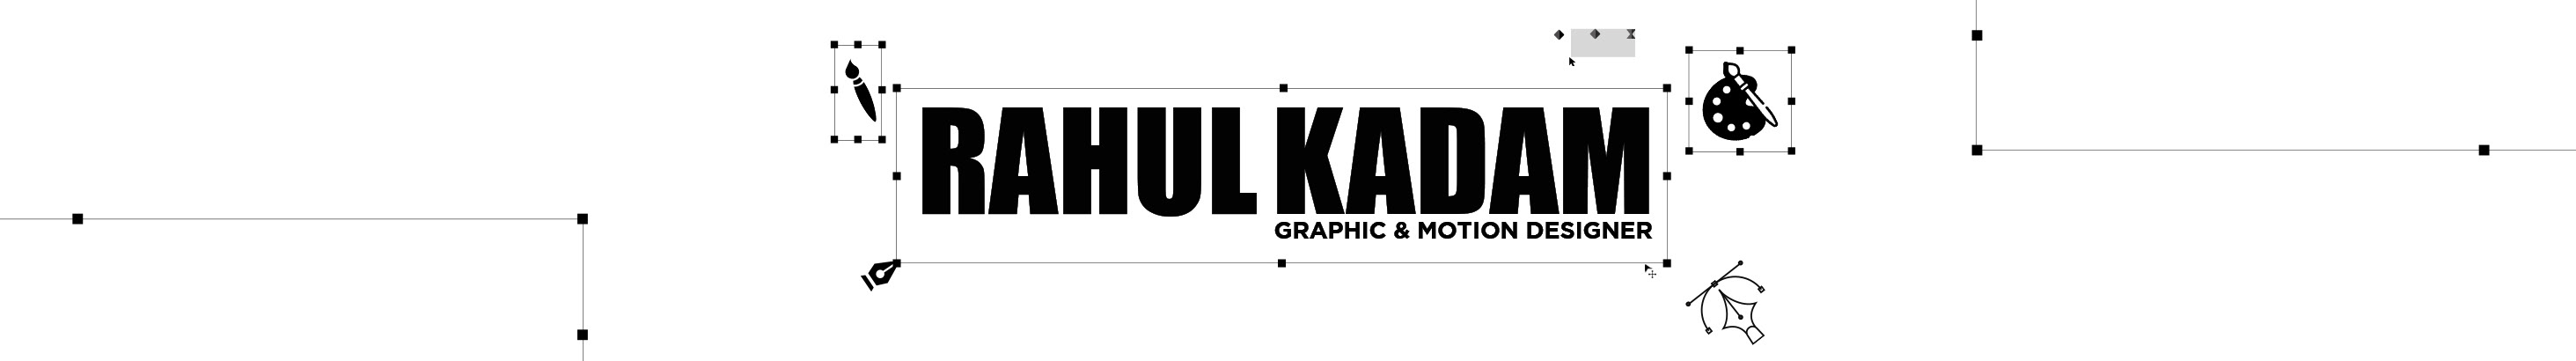 Rahul kadam's profile banner